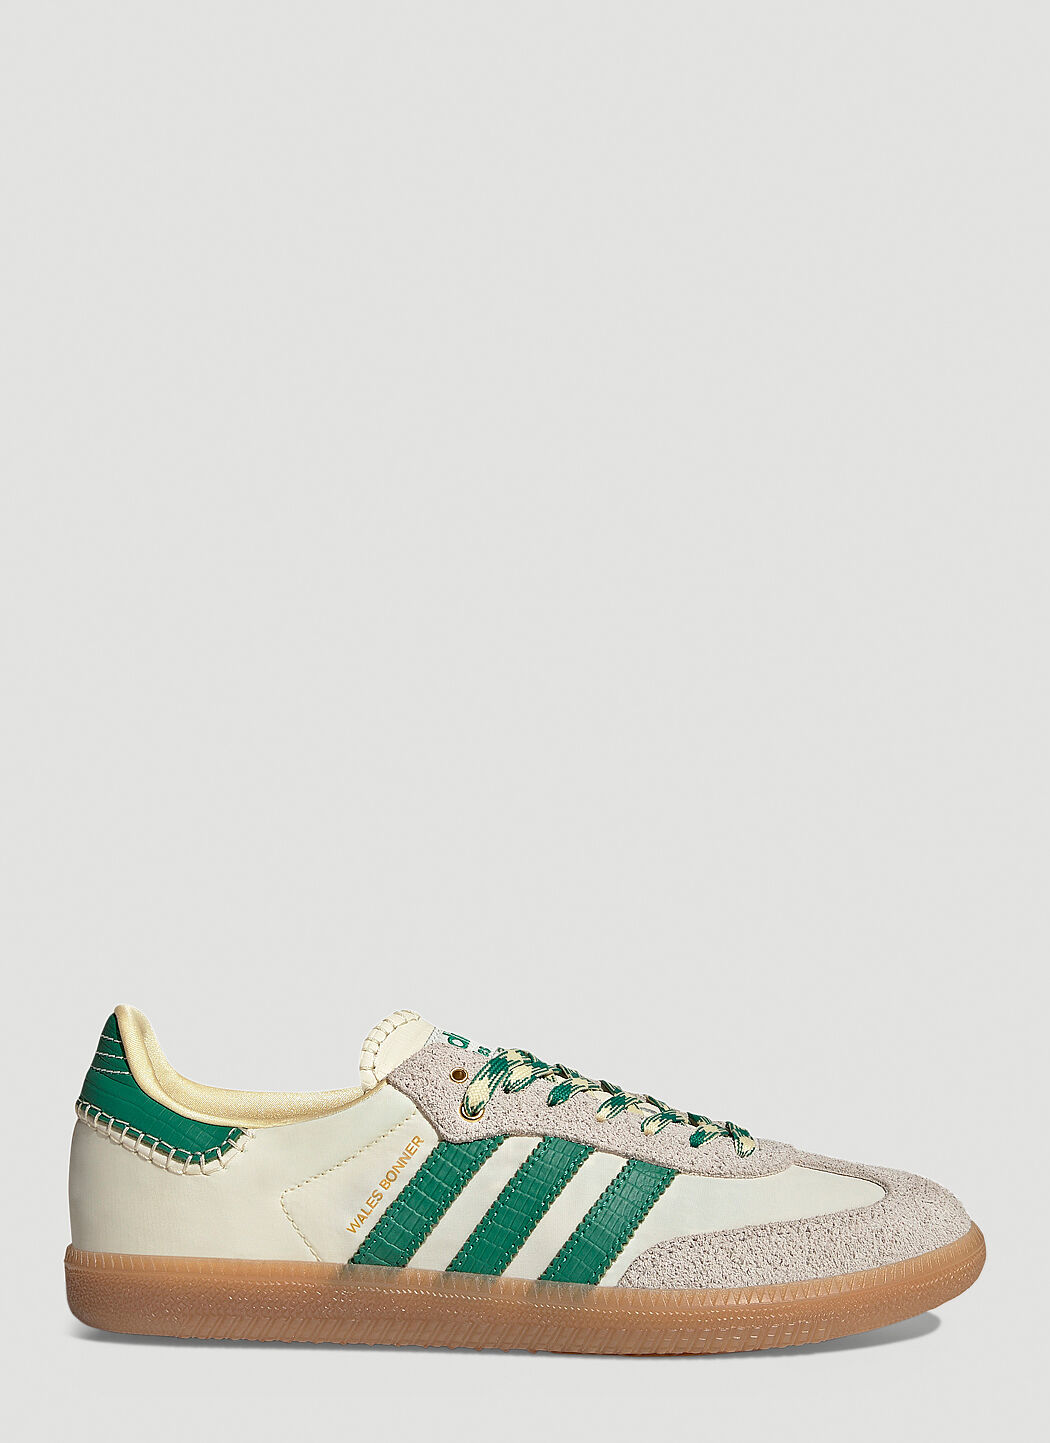 adidas by Wales Bonner Samba Sneakers 绿色 awb0354010